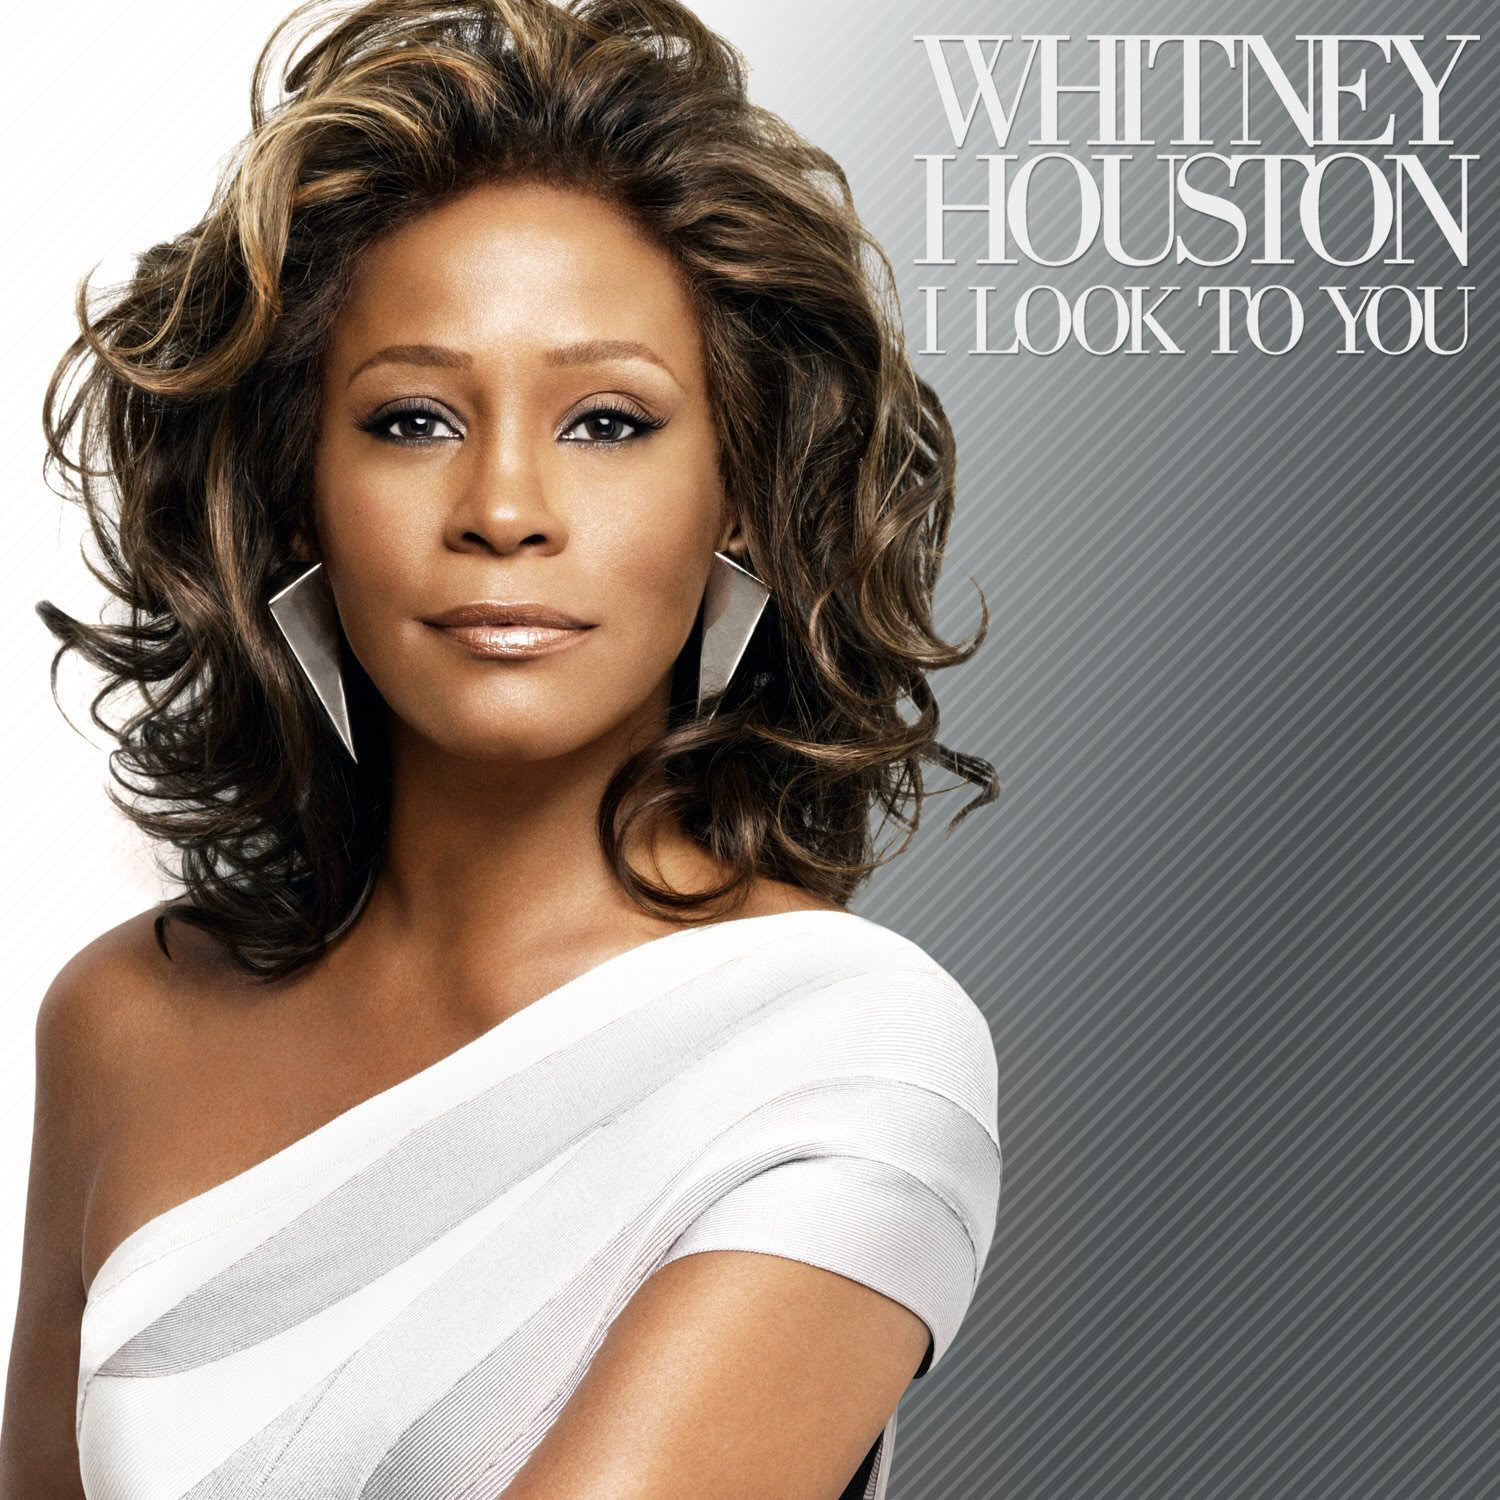 Whitney+Houston+I+LOOK+TO+YOU.jpg